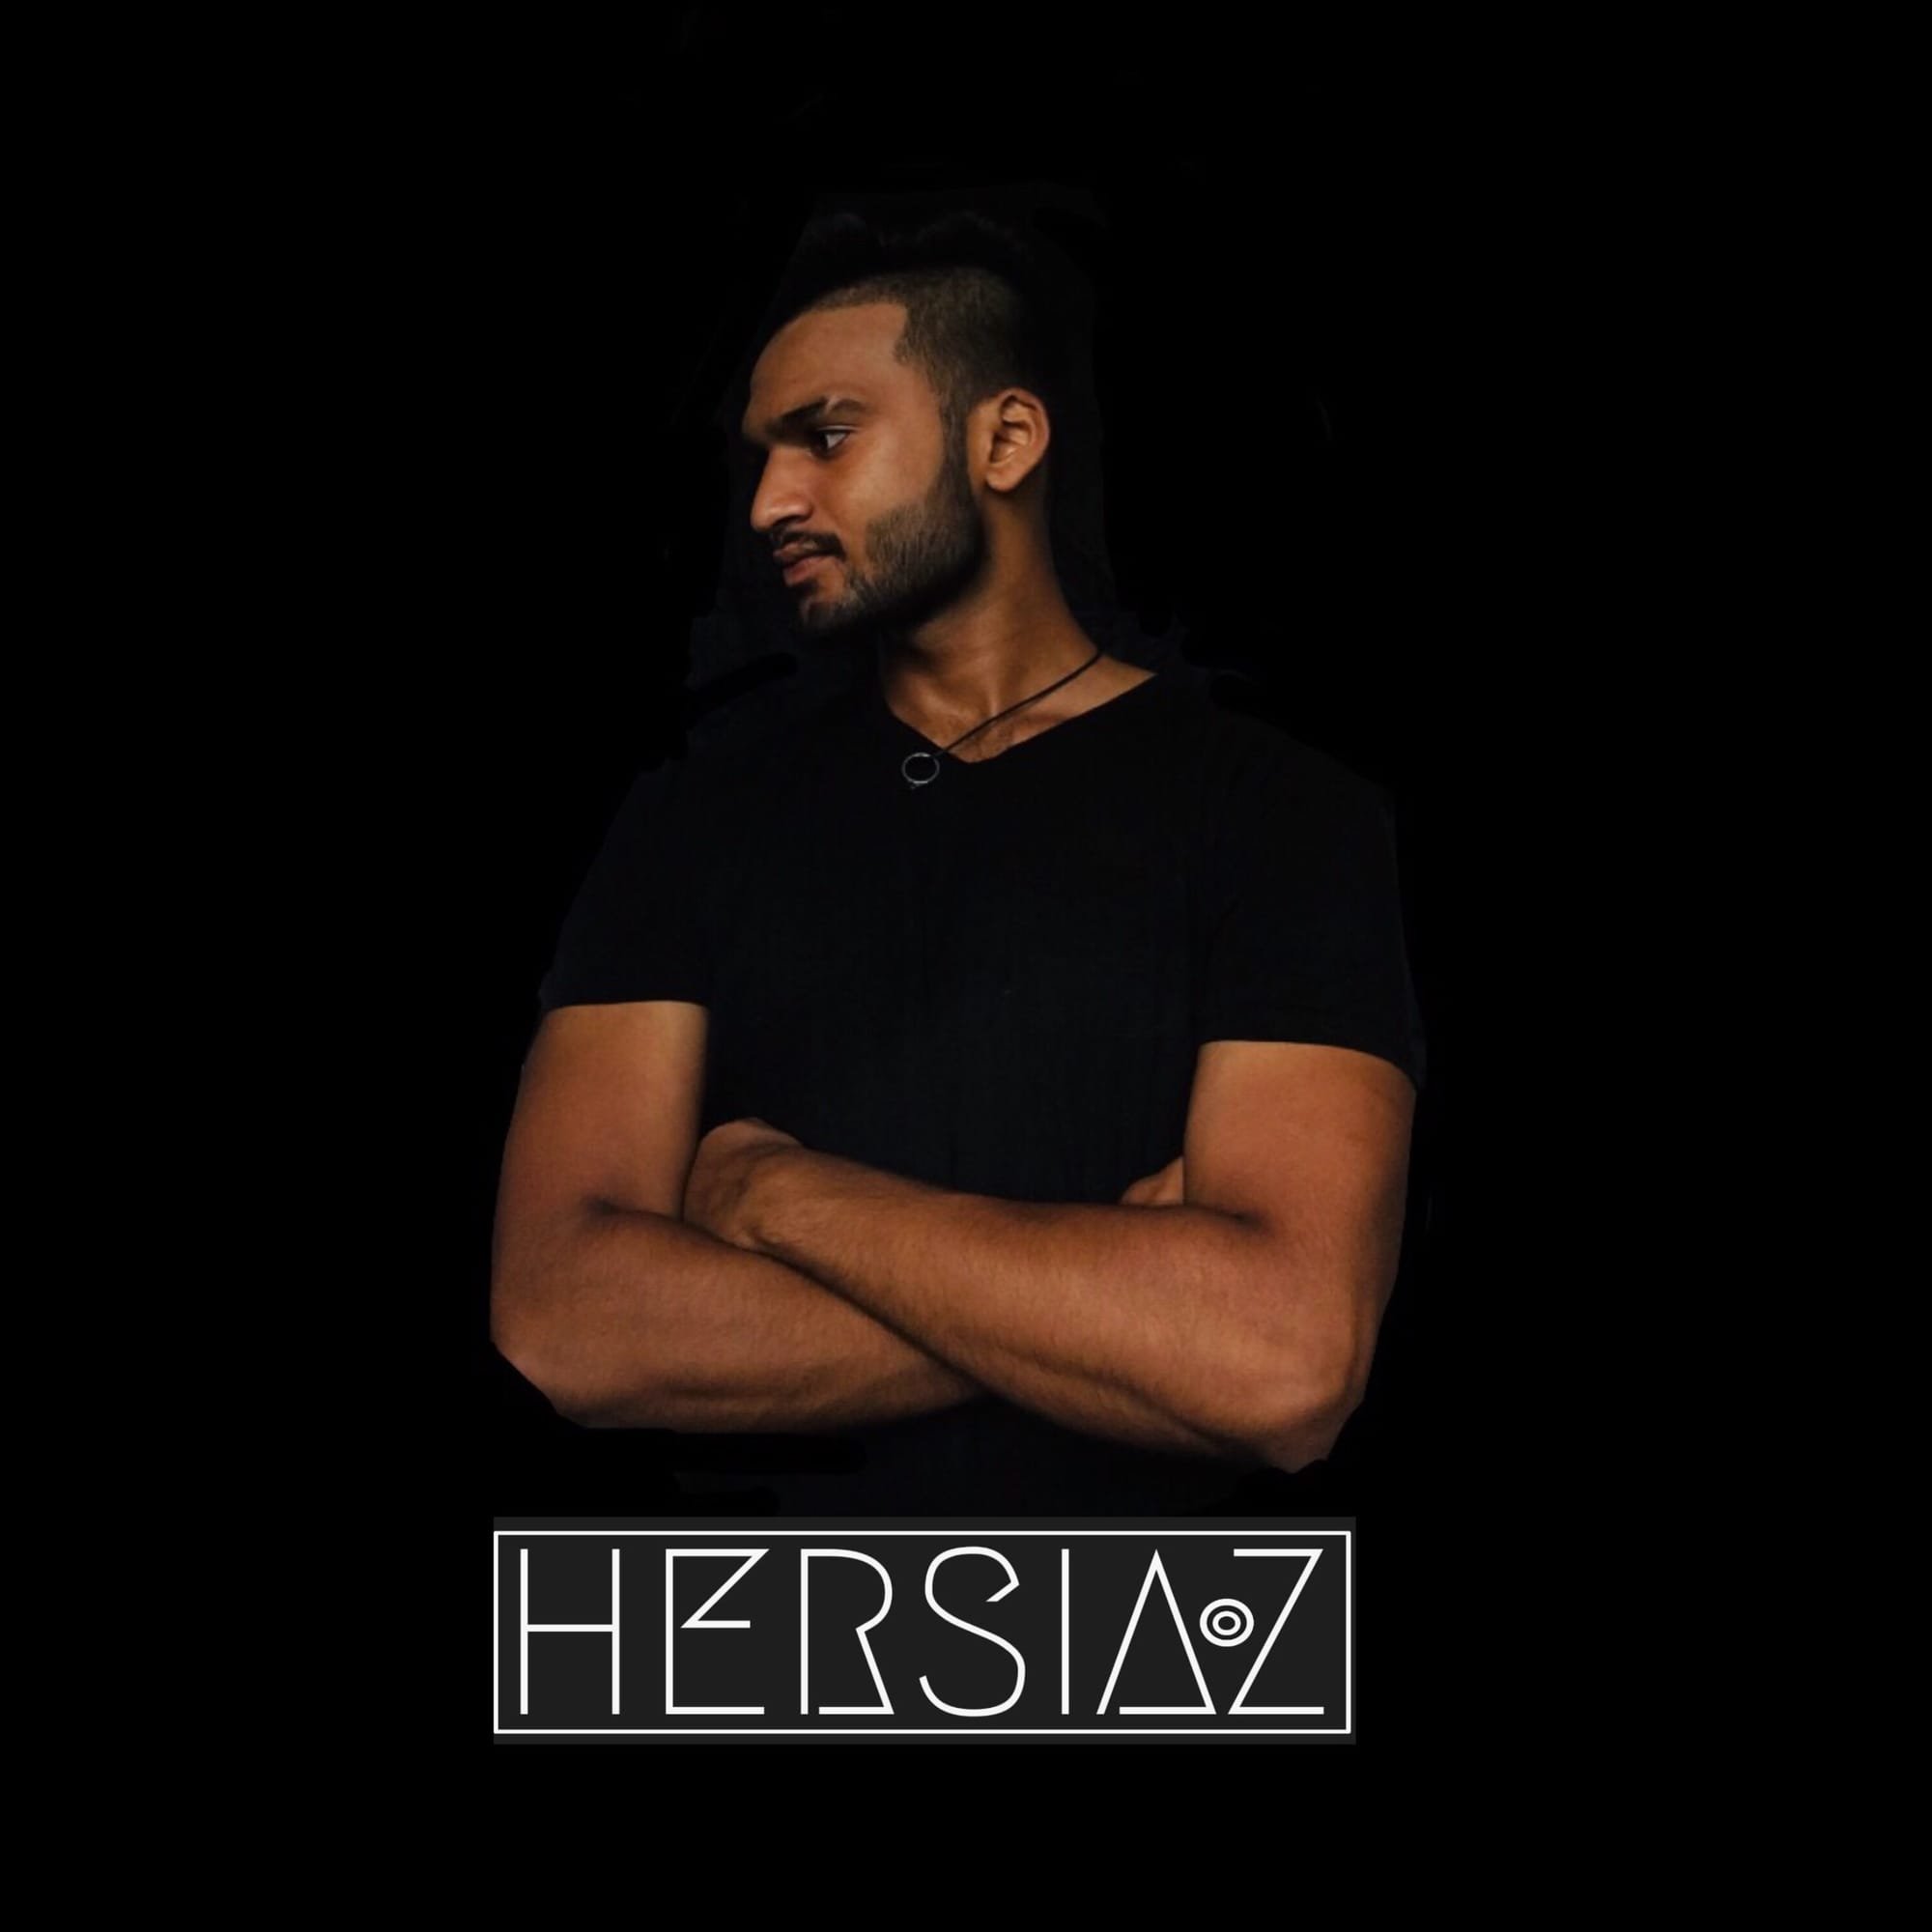 Hersiaz Hazi starts new show Spectacular episode 2.